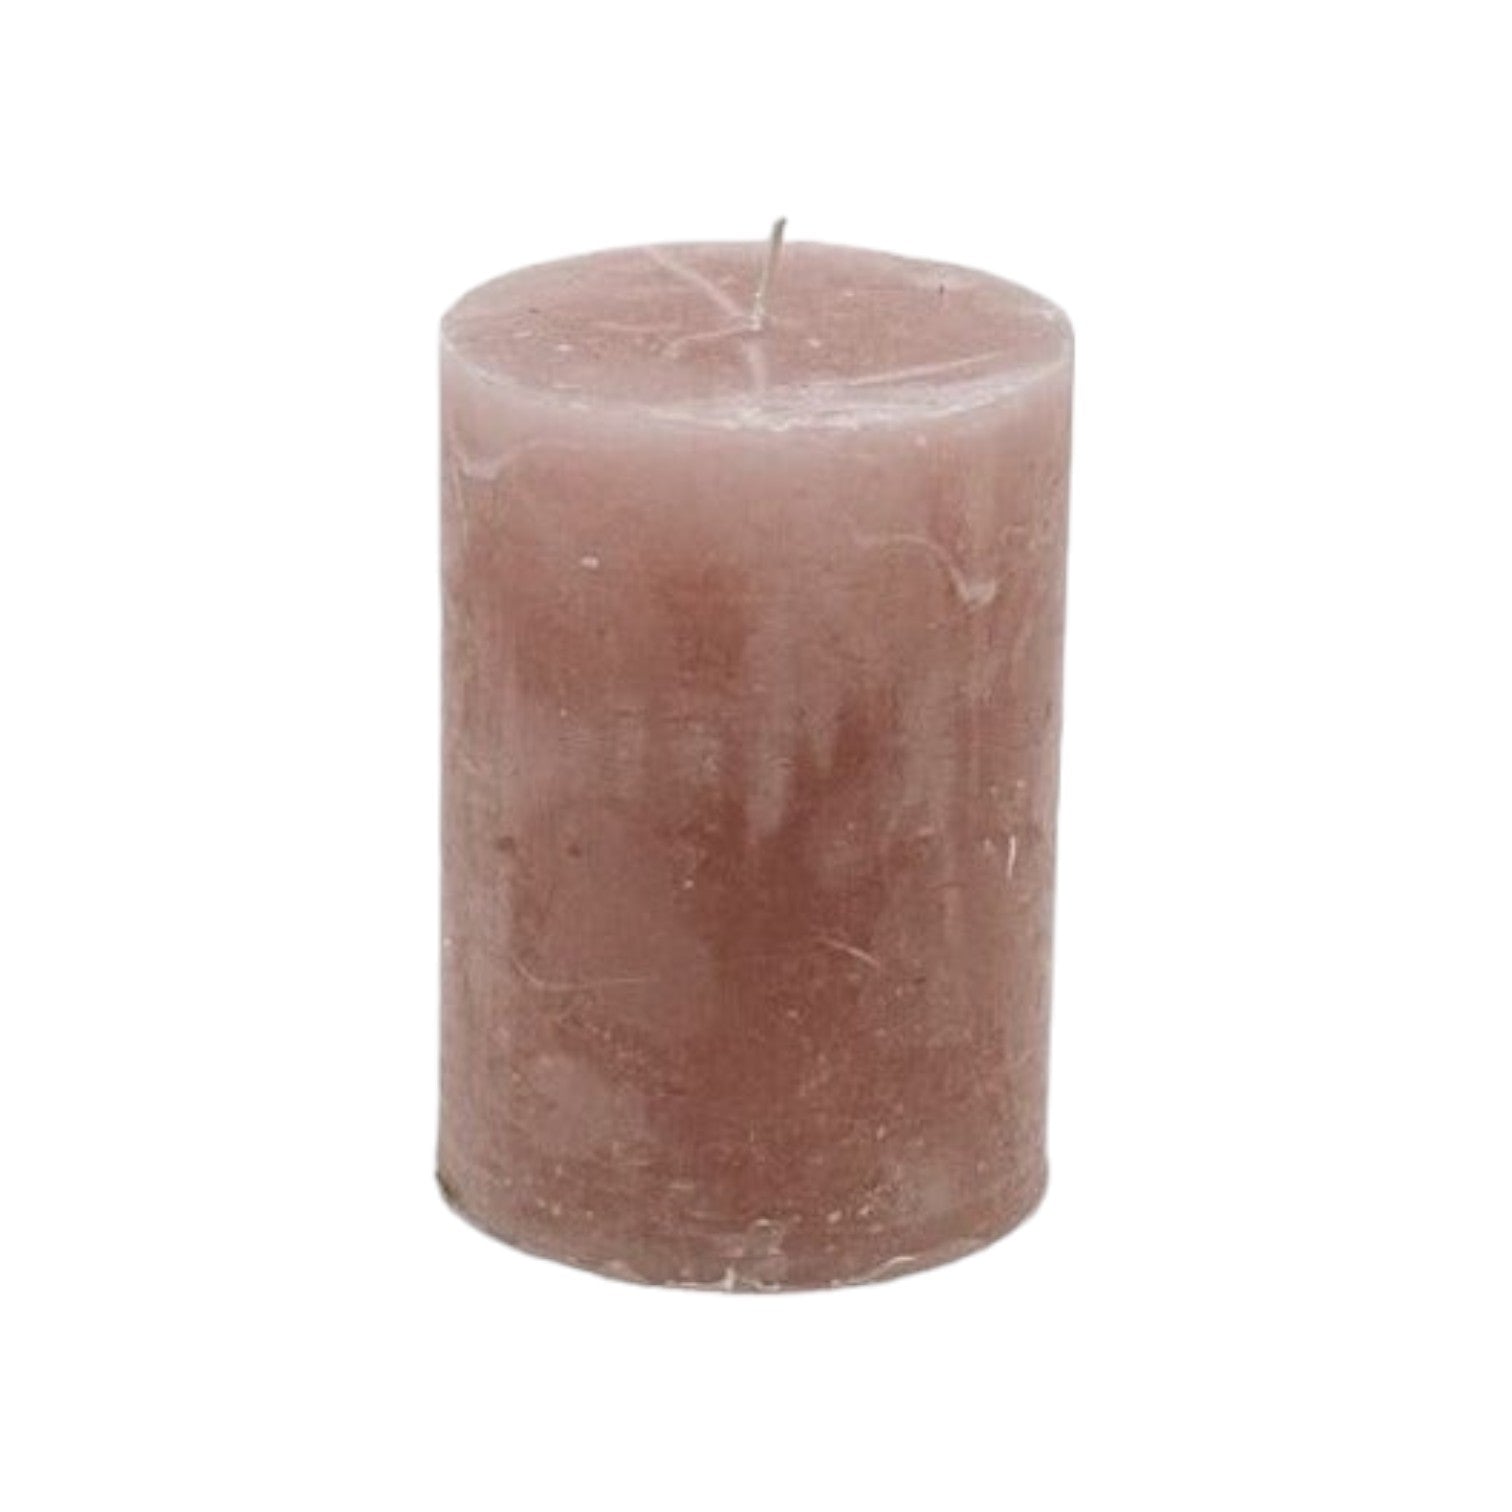 Branded By - Kaarsen 'Pillar' (Ø7cm x 10cm) - Antique Pink (set van 6)